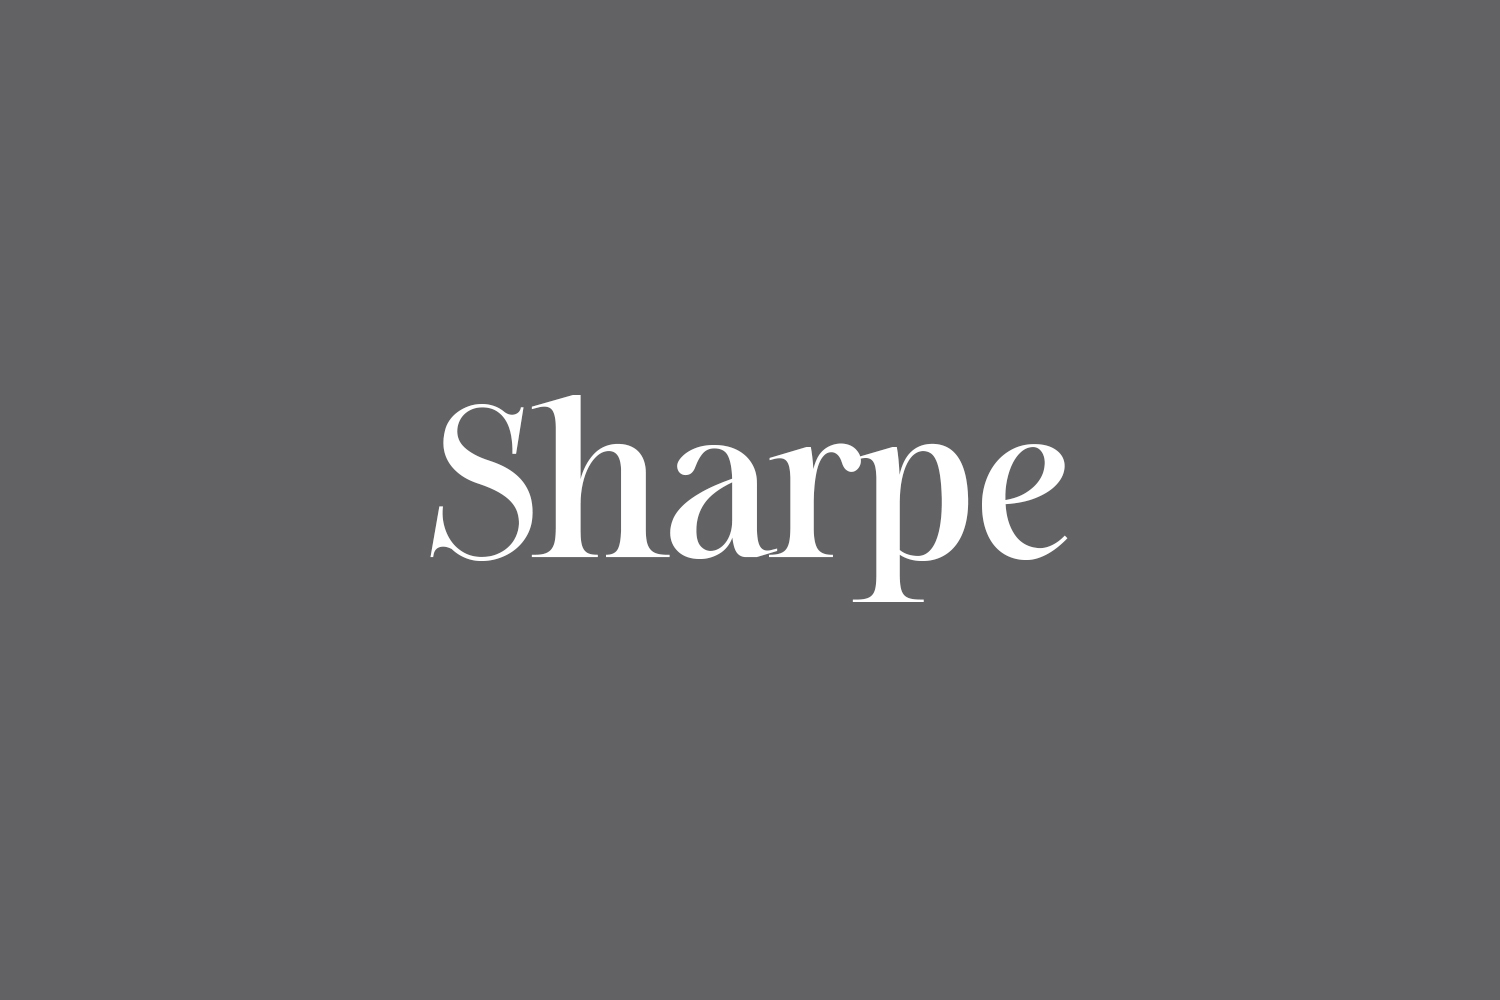 Sharpe Free Font